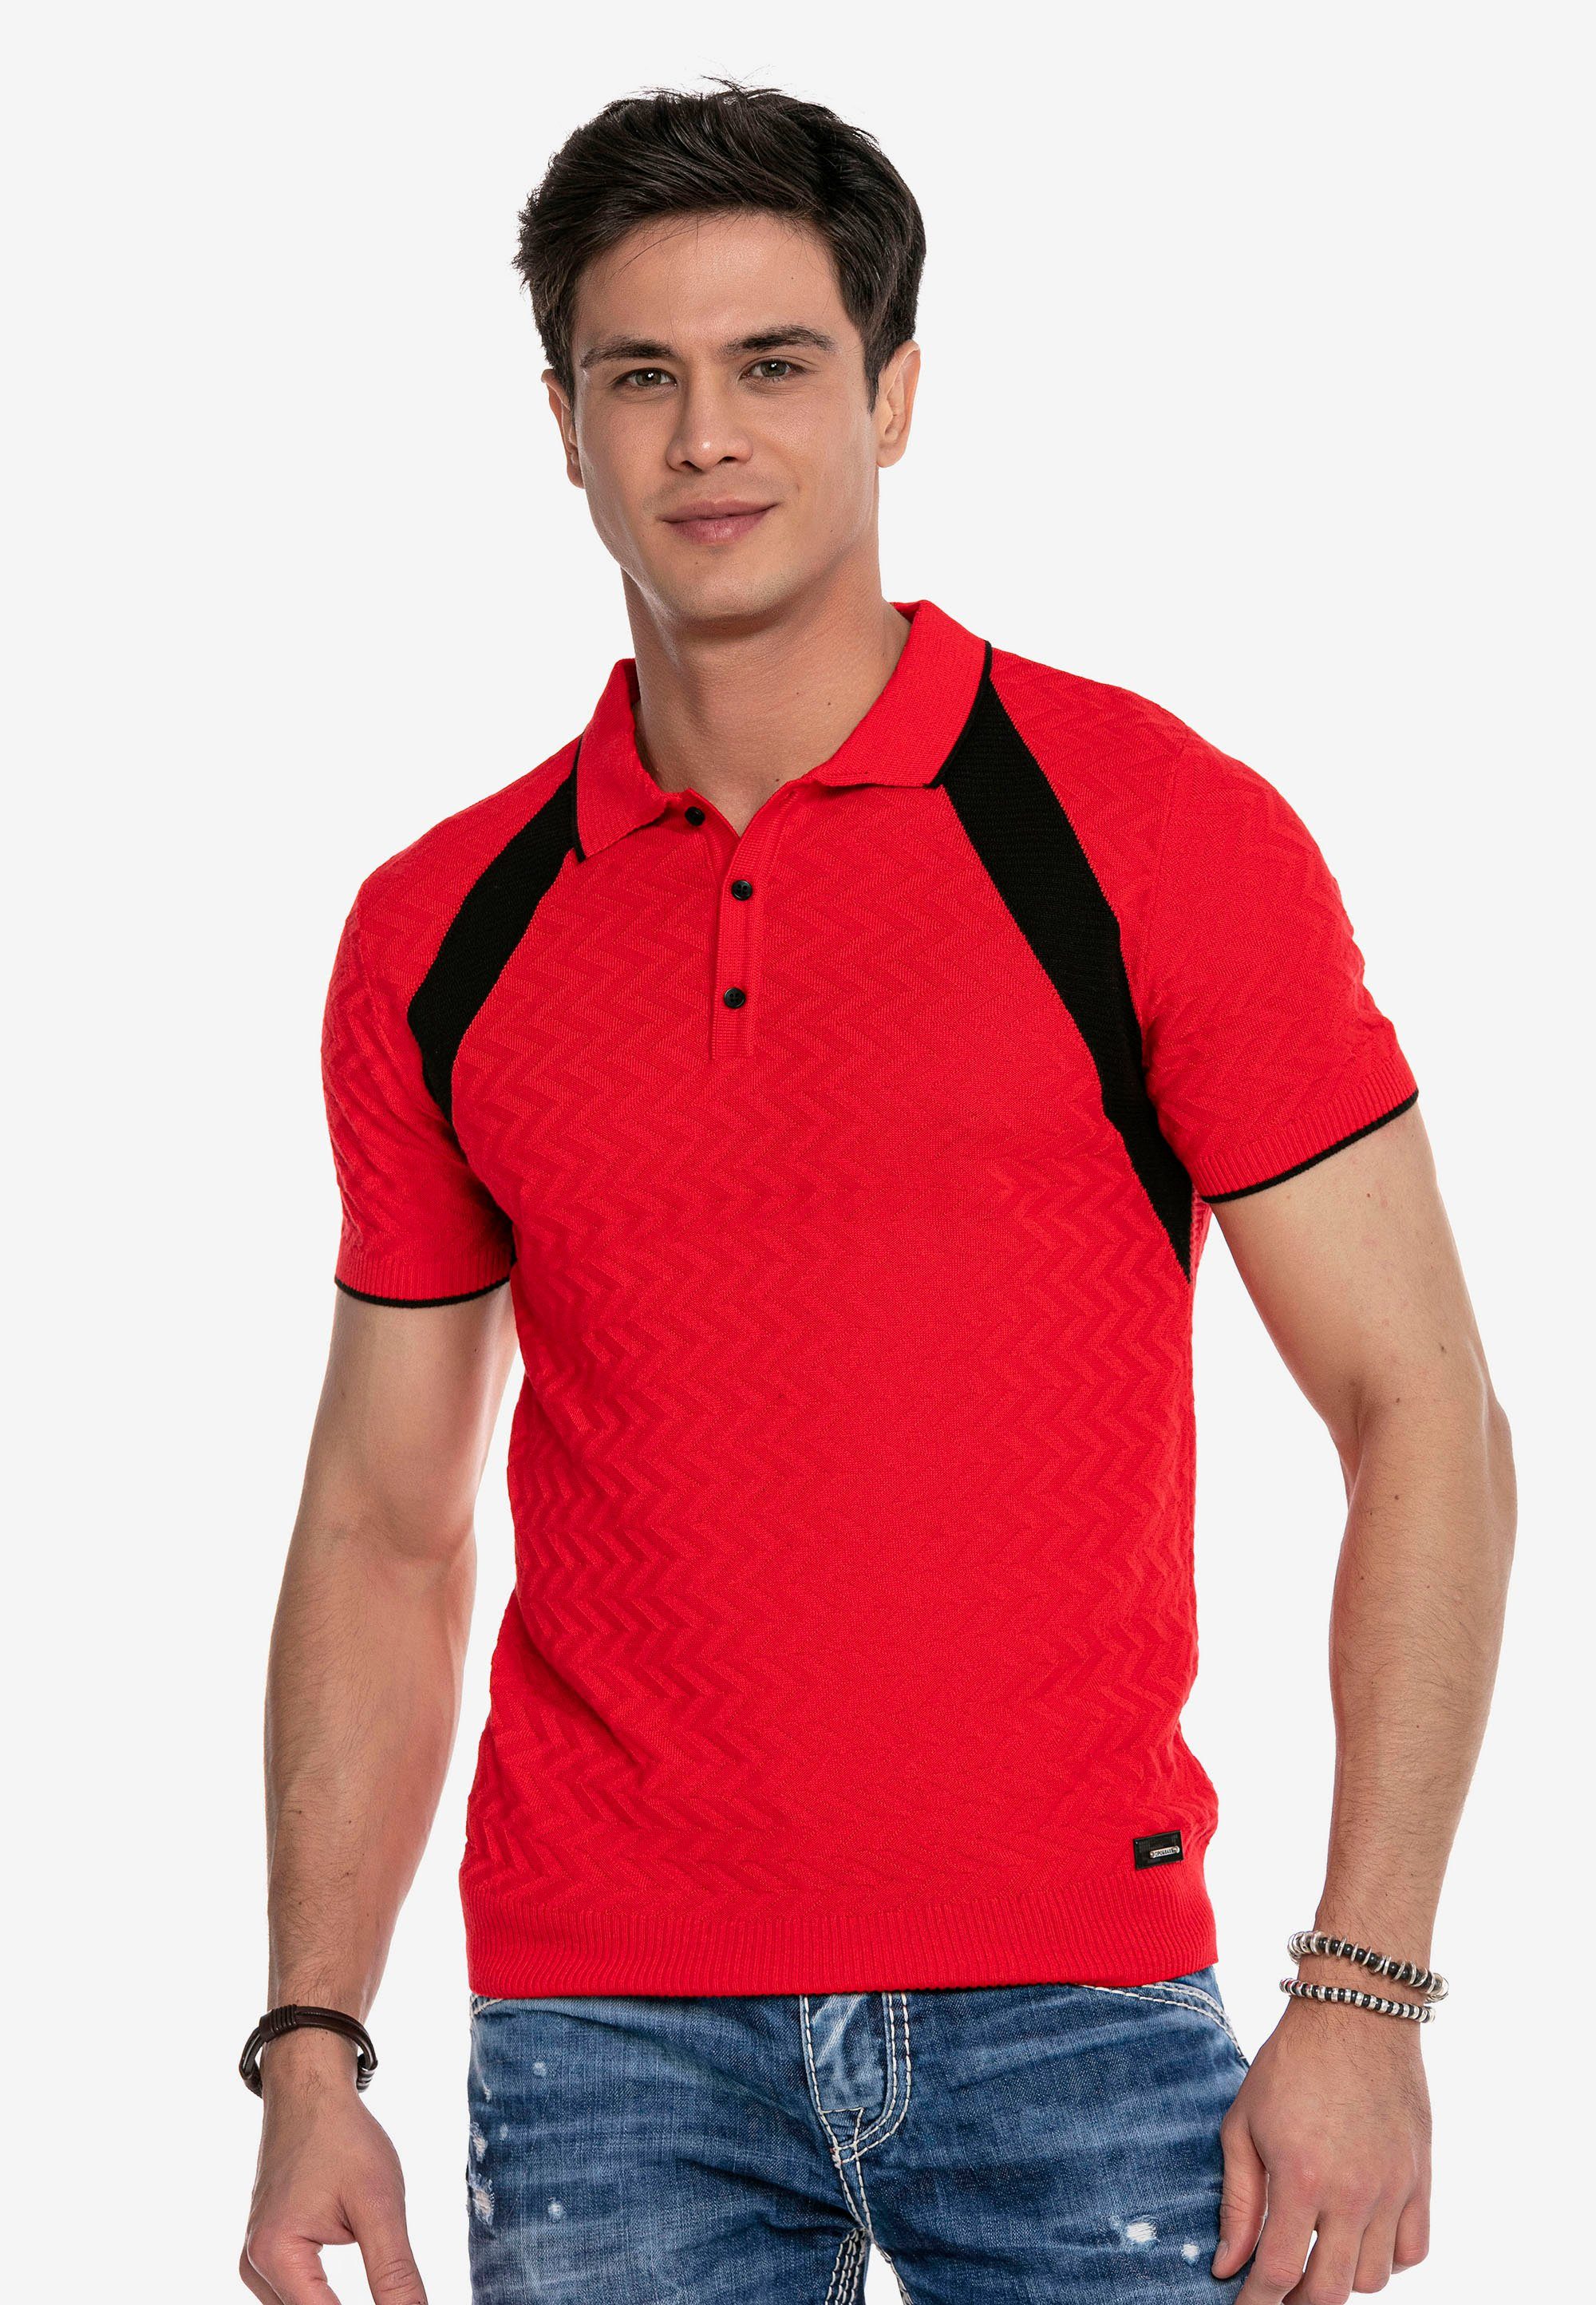 Cipo & Baxx Poloshirt mit dezentem Muster rot-schwarz | Poloshirts